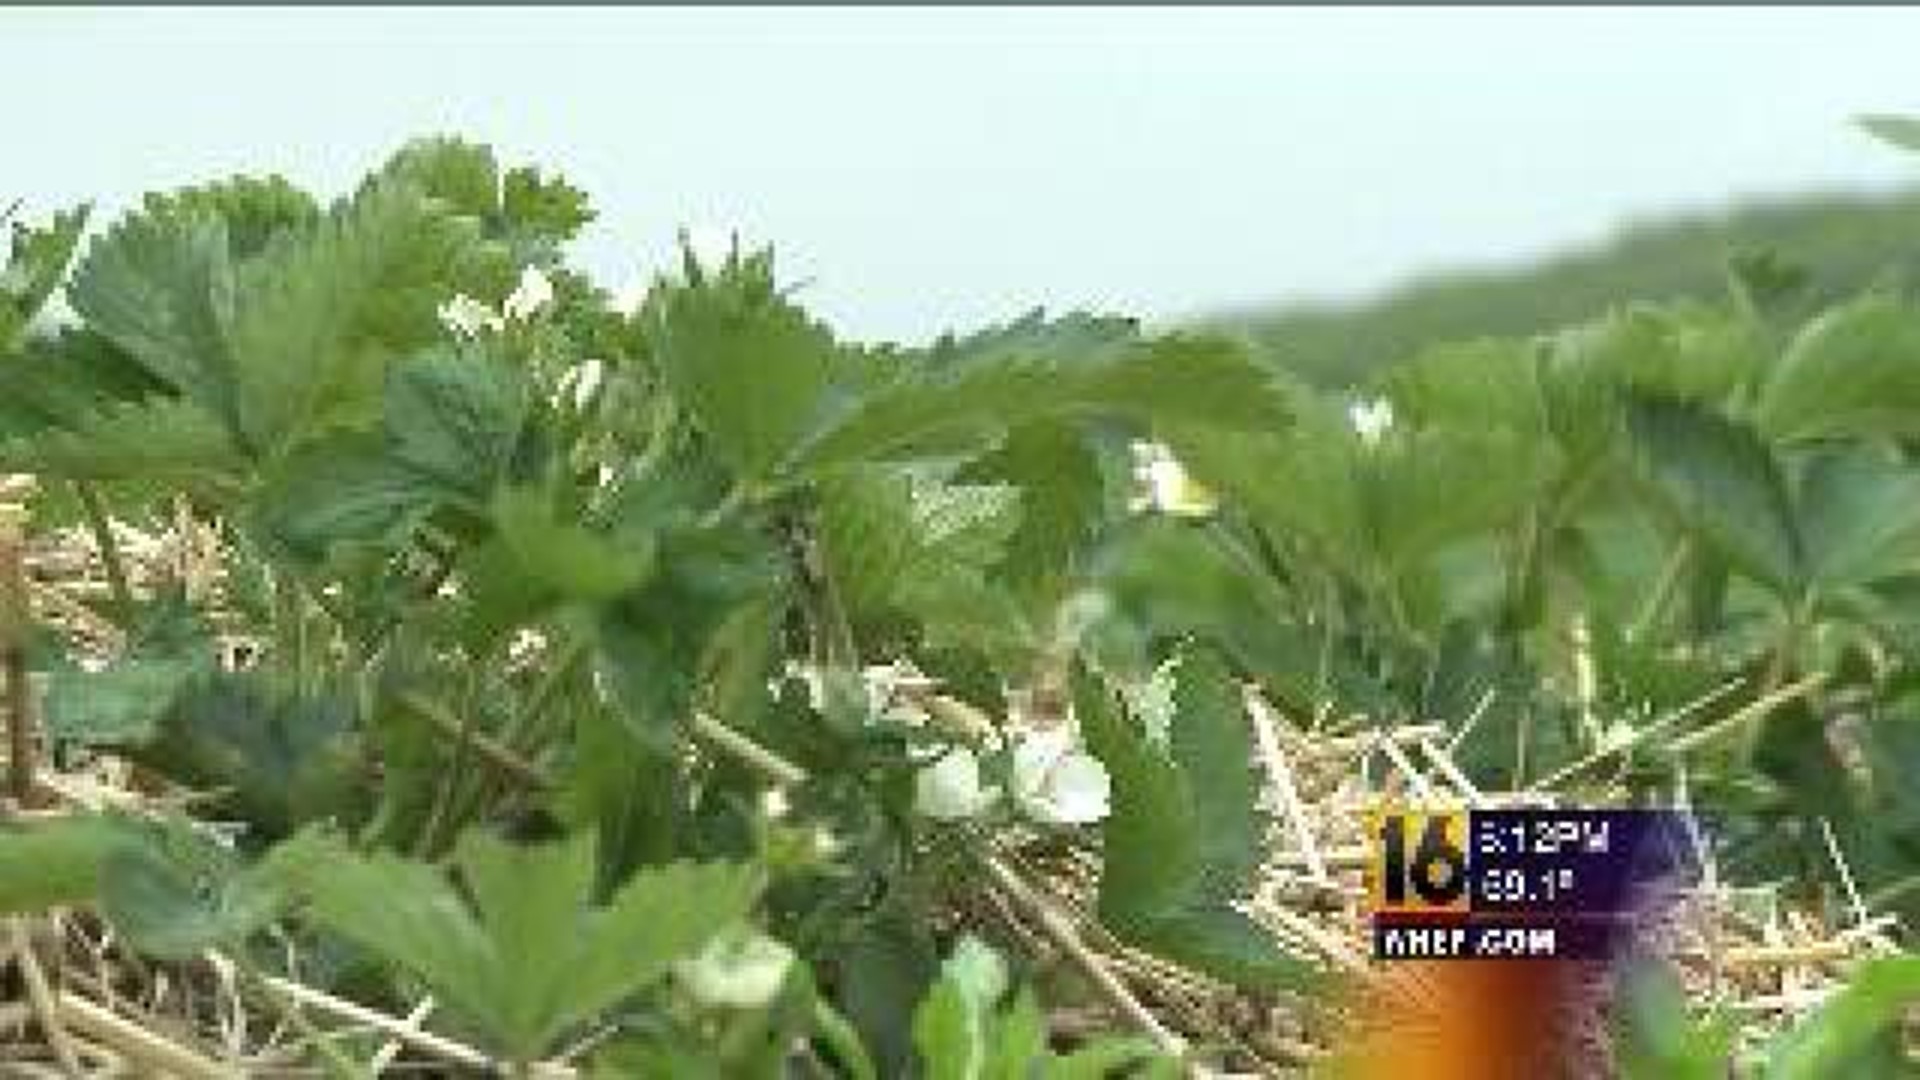 Crop Predictions Mixed In Schuylkill County